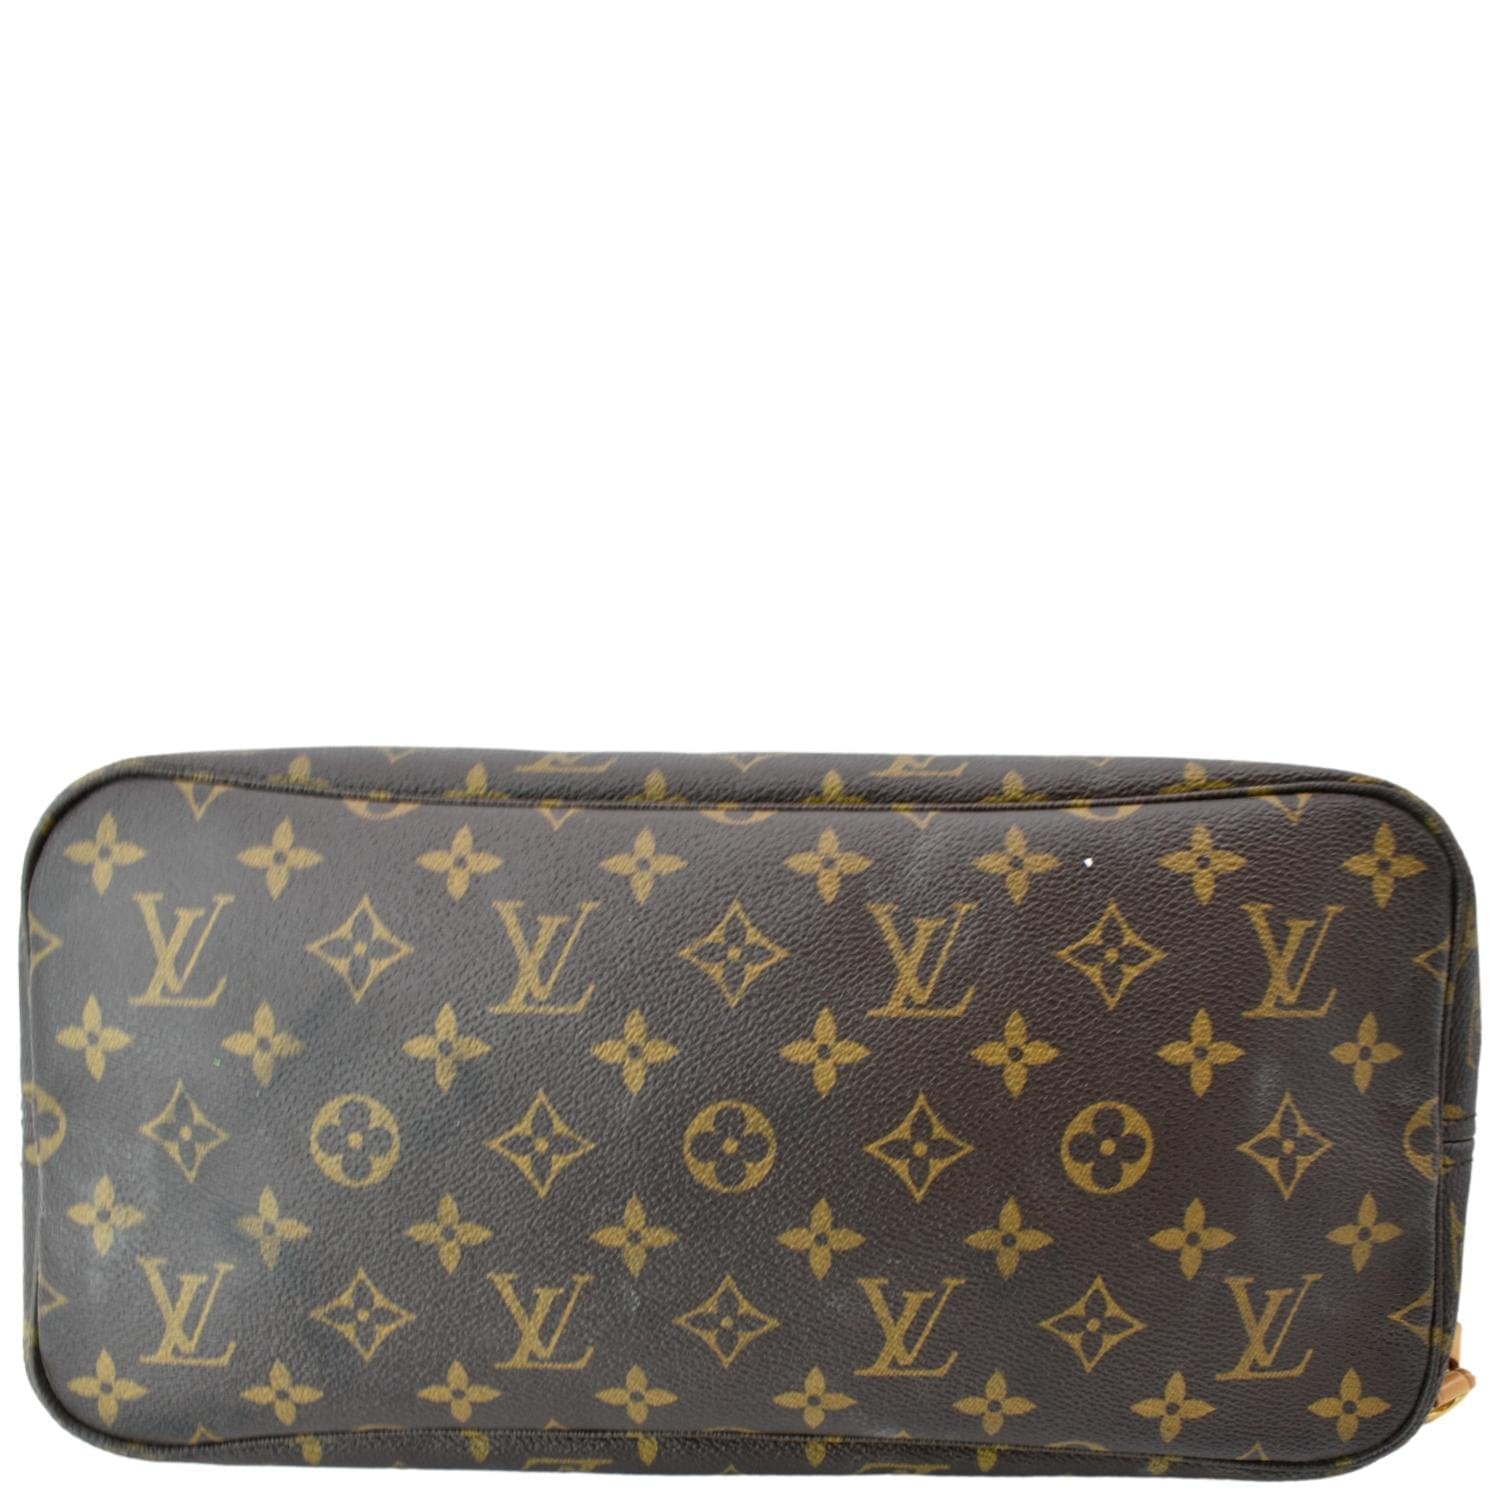 Louis Vuitton Plat Handbag in Ebony Checker Canvas Customized Marilyn Forever